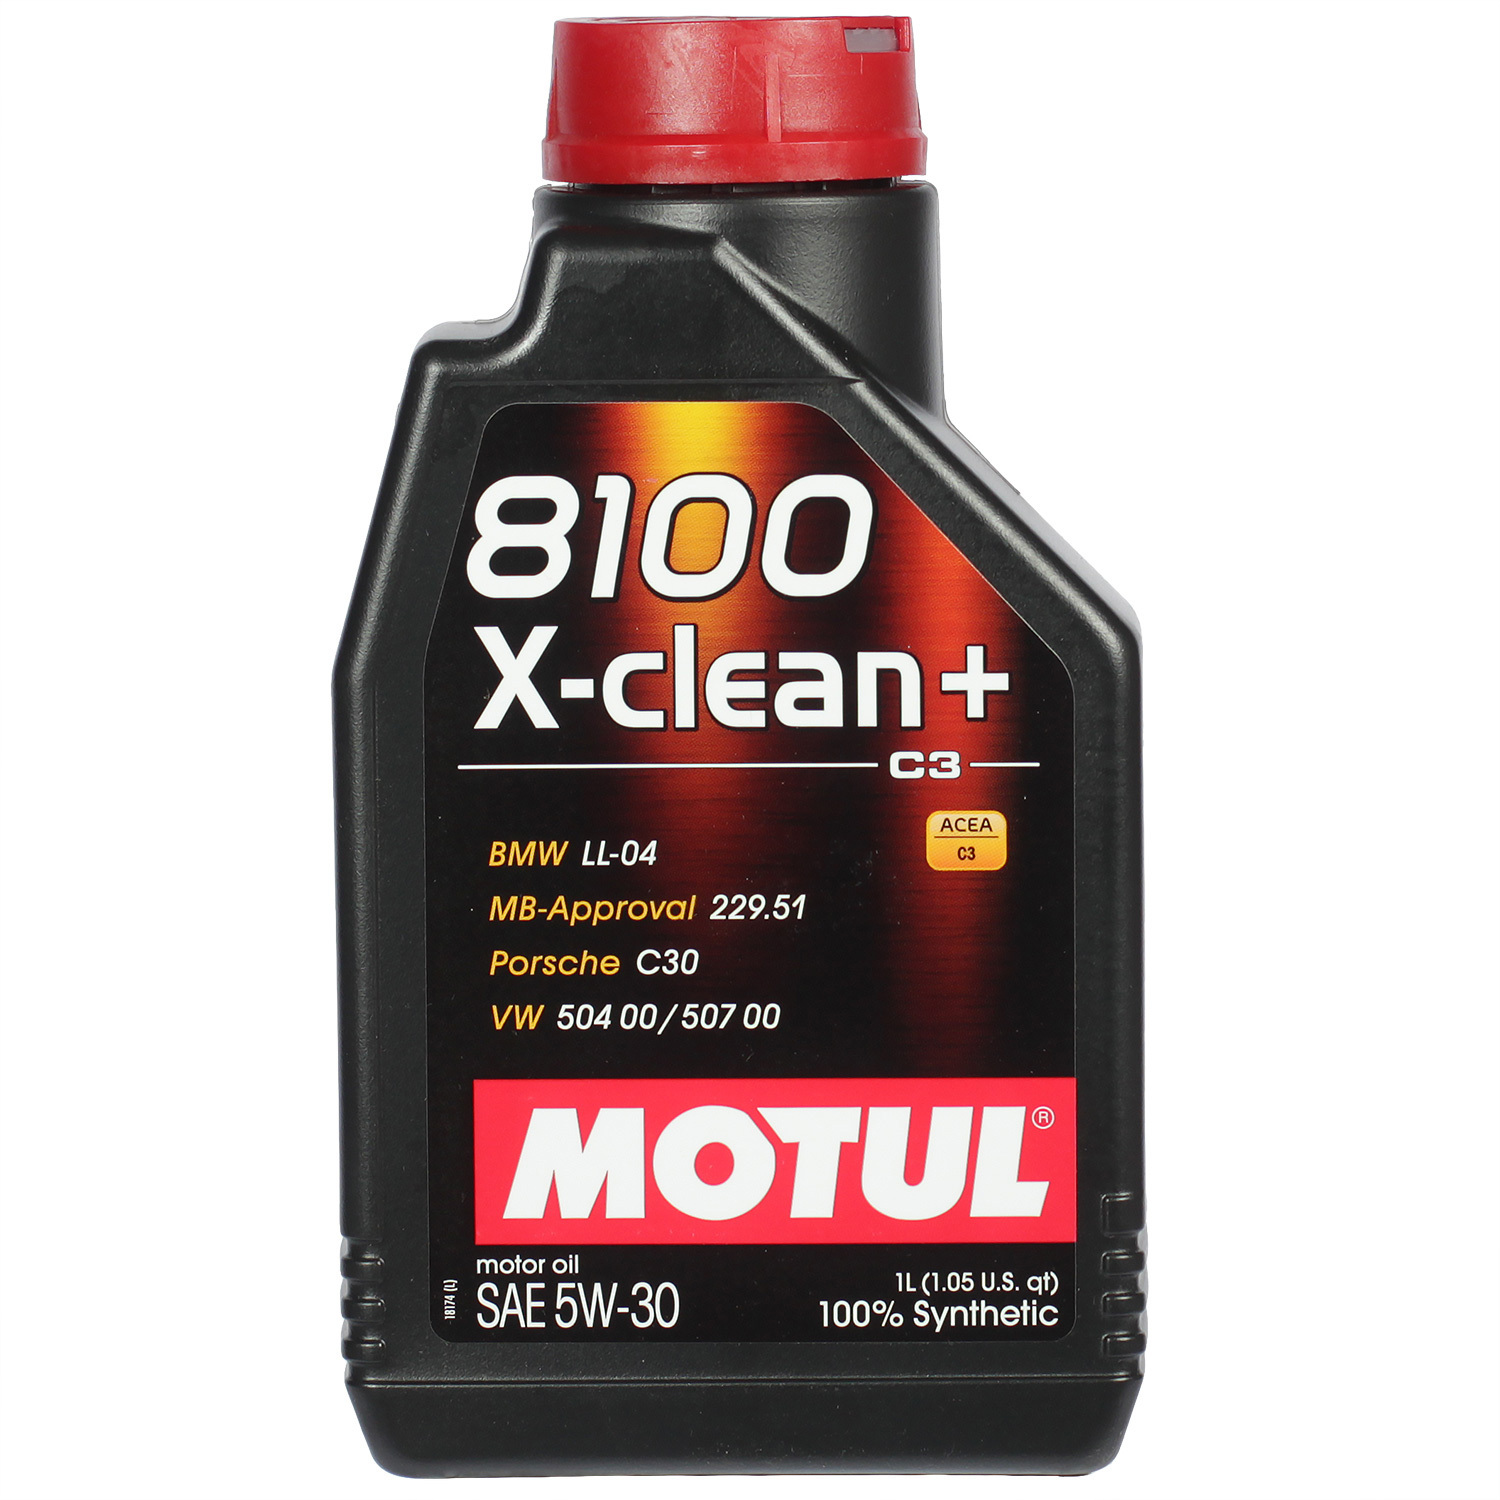 Motul Моторное масло Motul 8100 X-clean+ 5W-30, 1 л масло моторное motul 8100 x cess 5w 30 5 л 108946